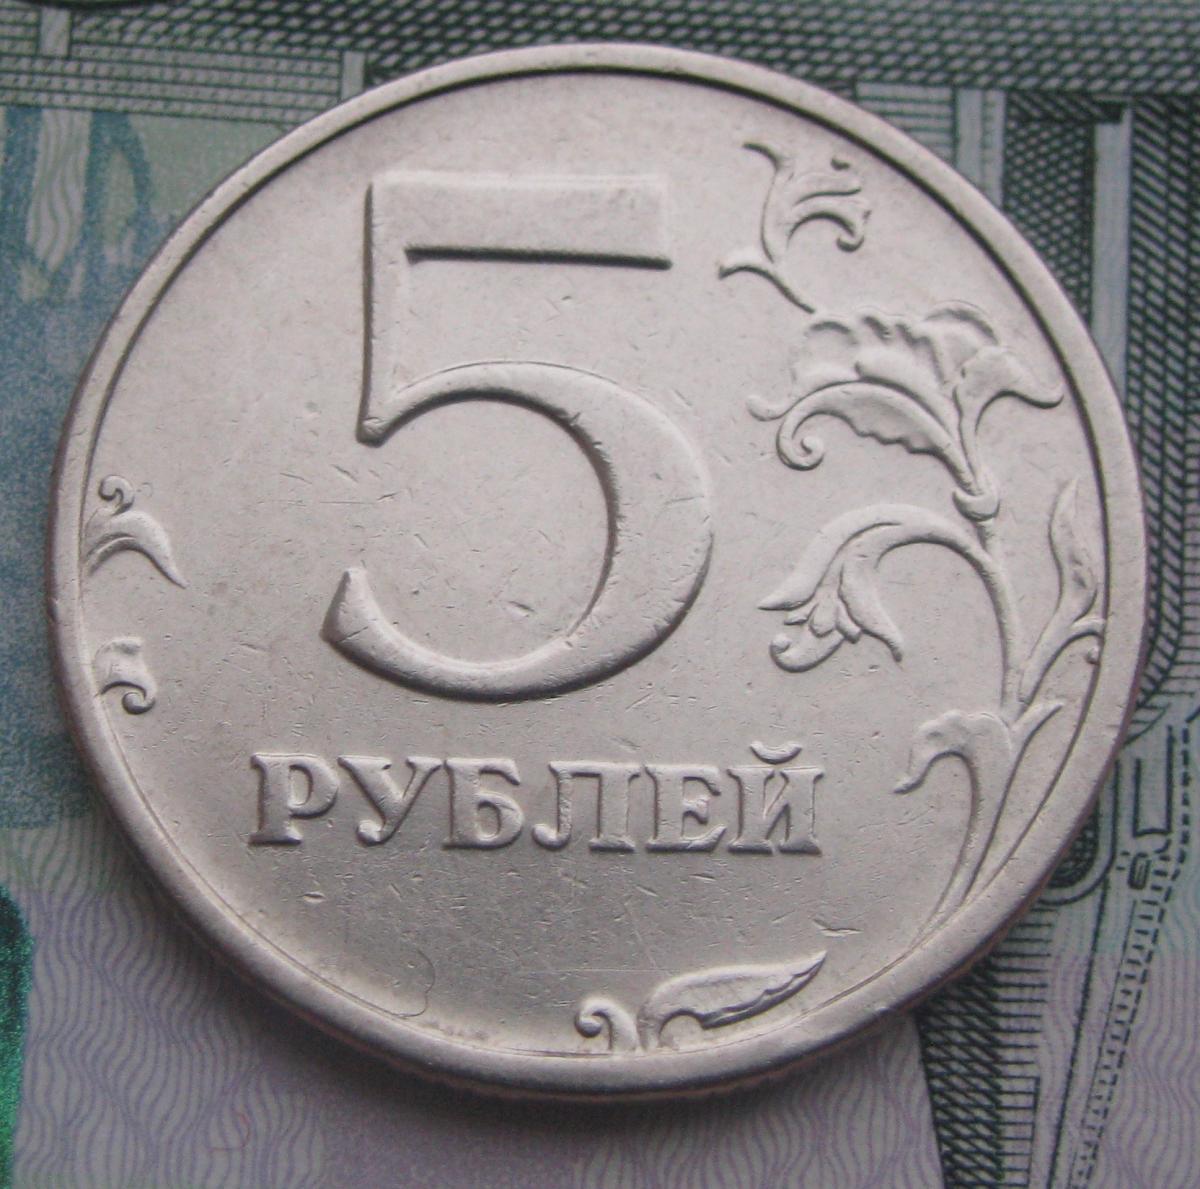 R 5 в рублях